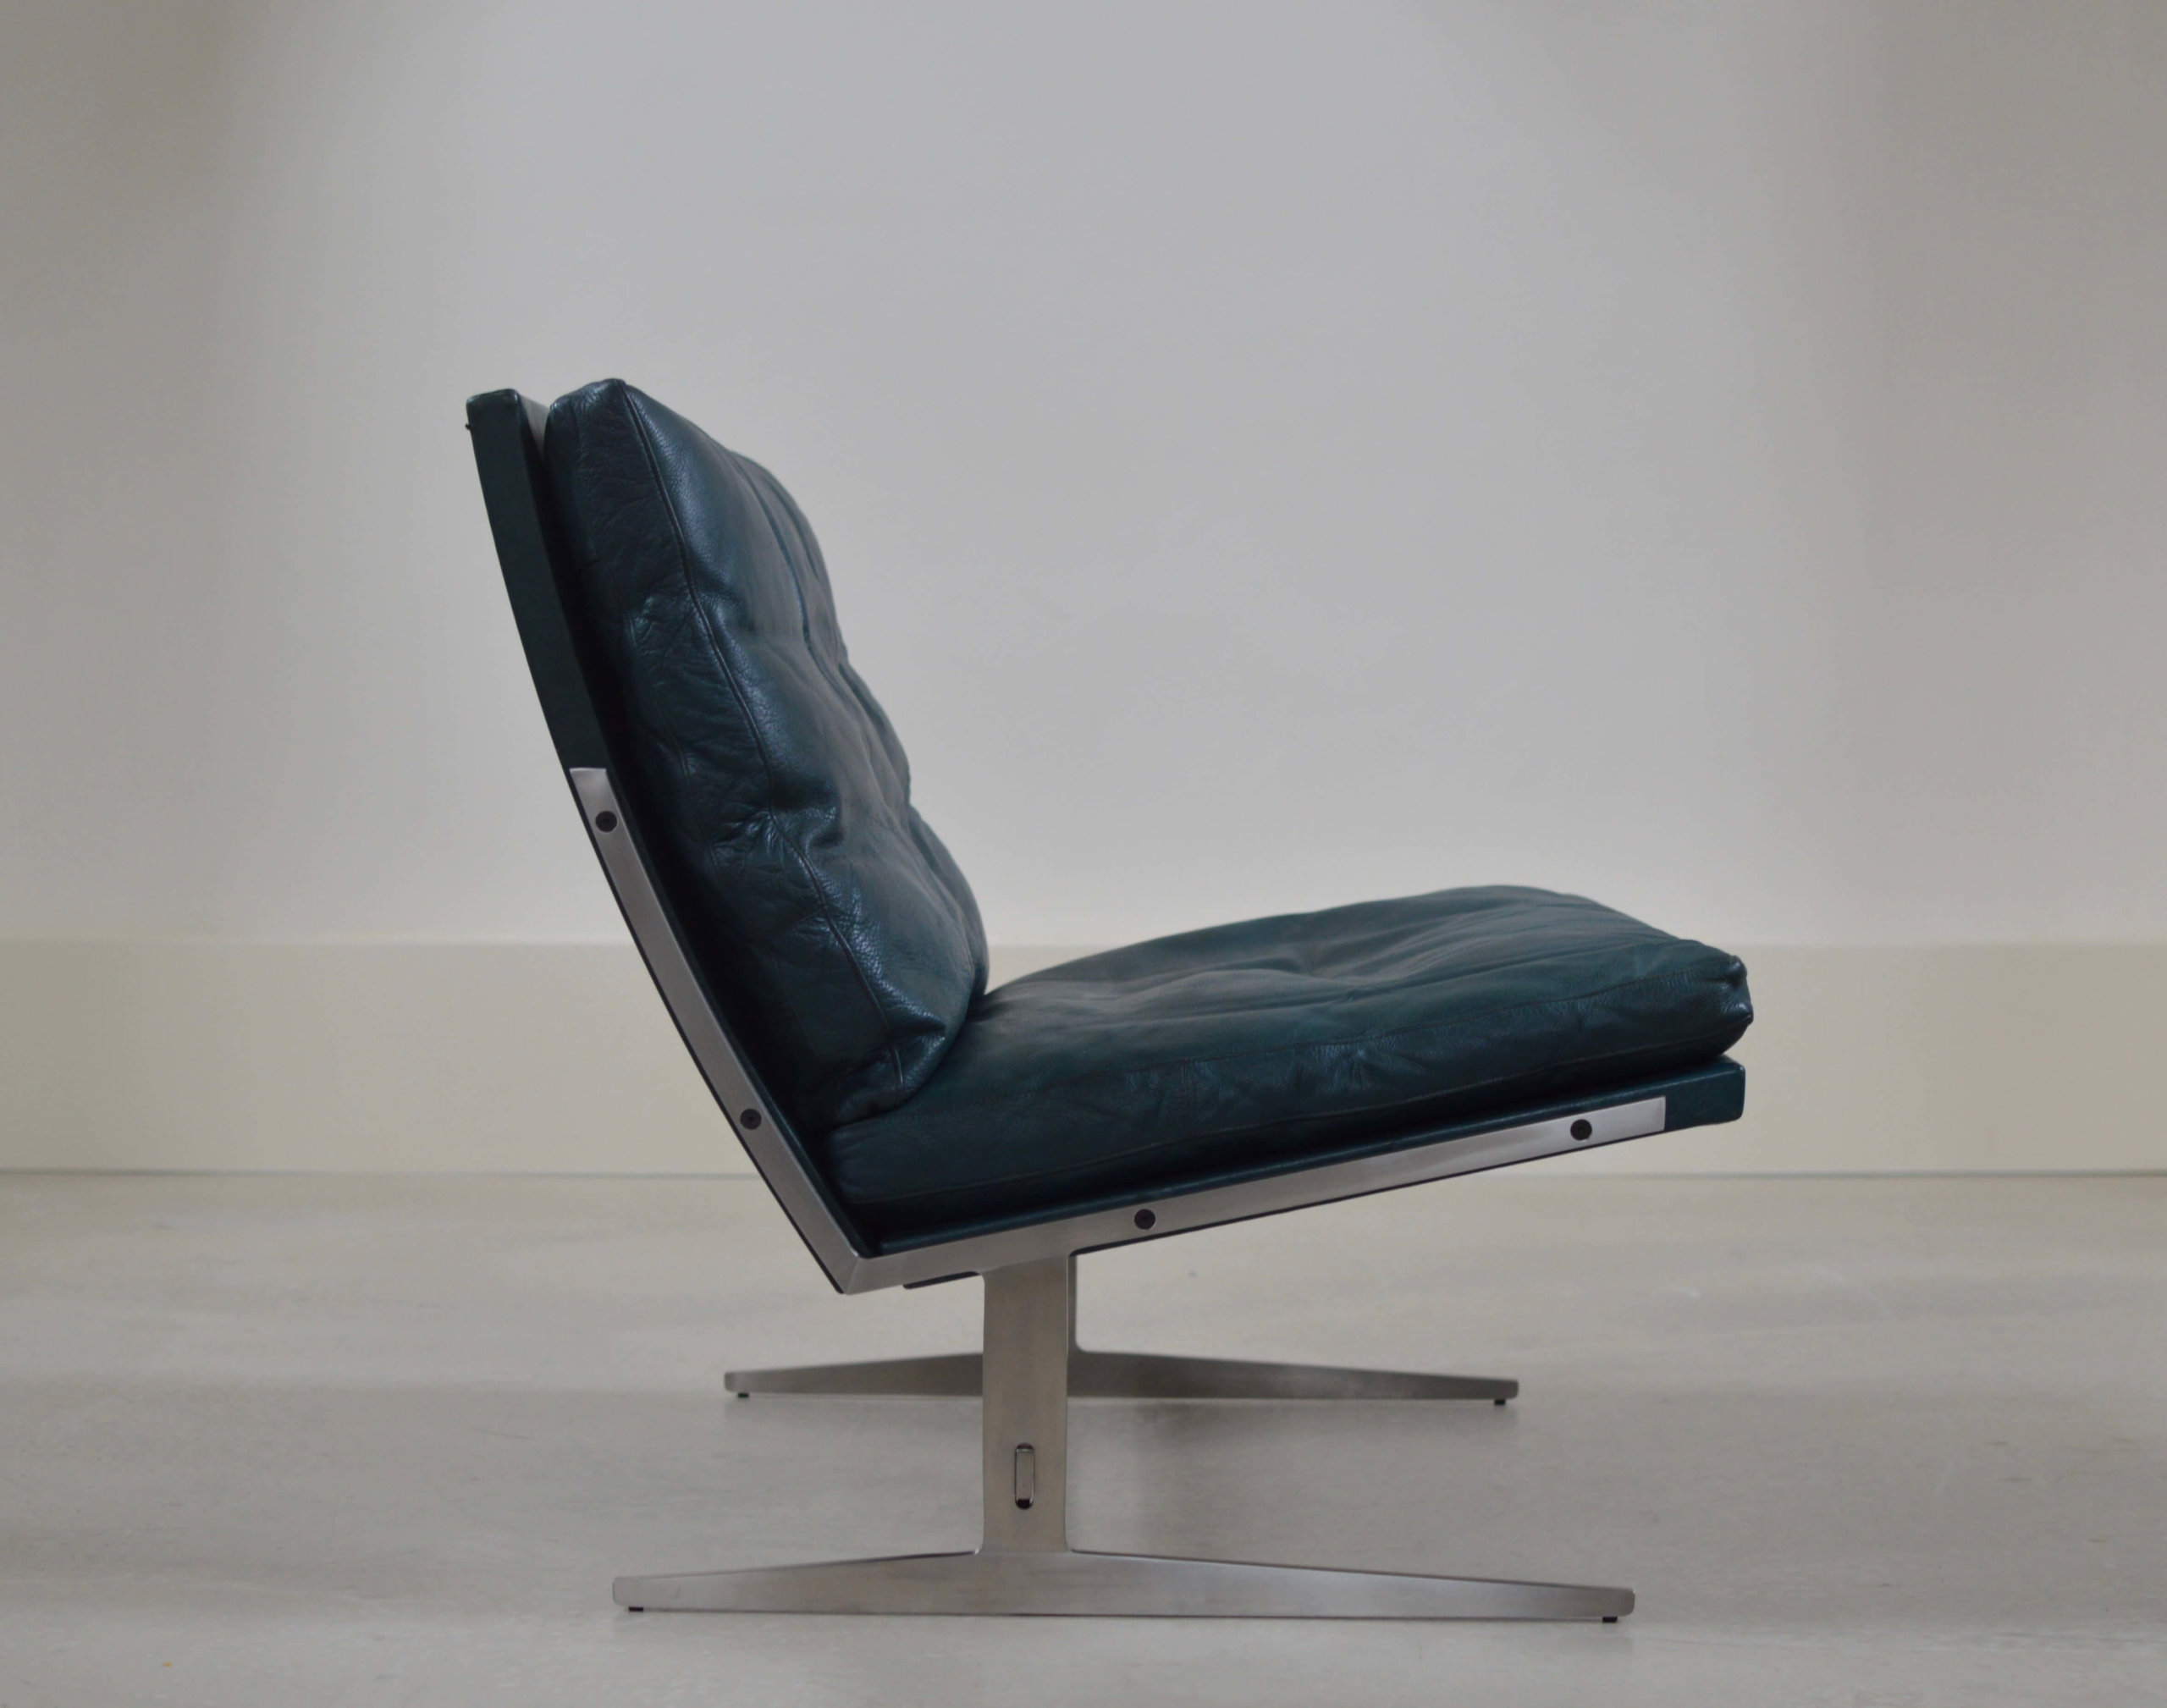 Vintage BO-561 Lounge chair